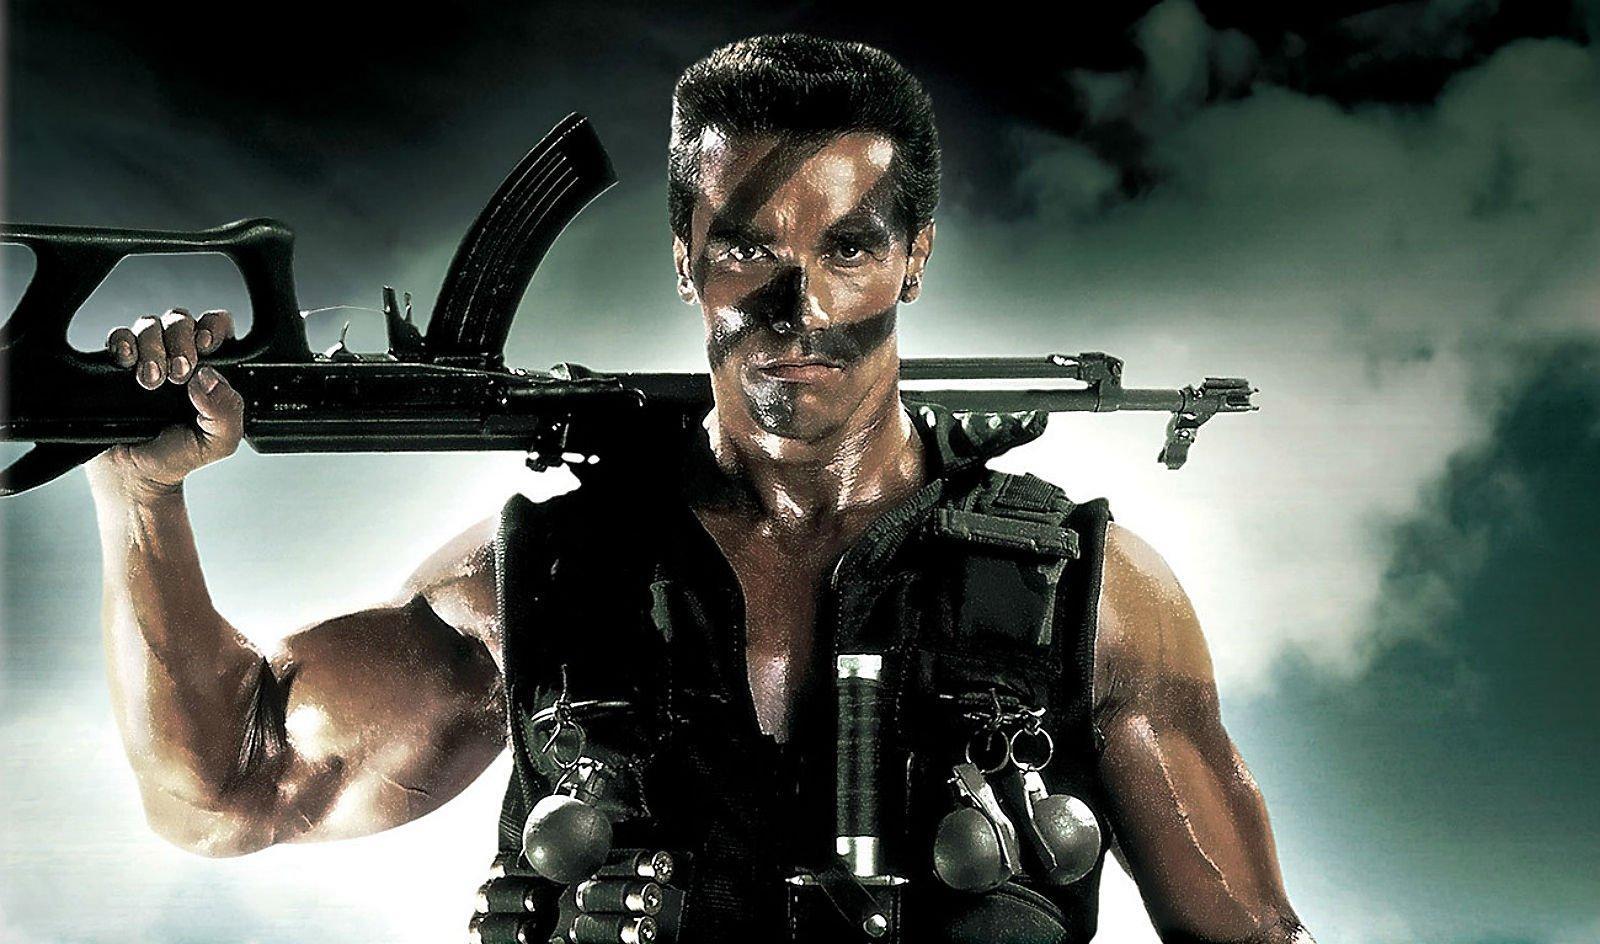 Arnold Schwarzenegger in "Commando" (1985)